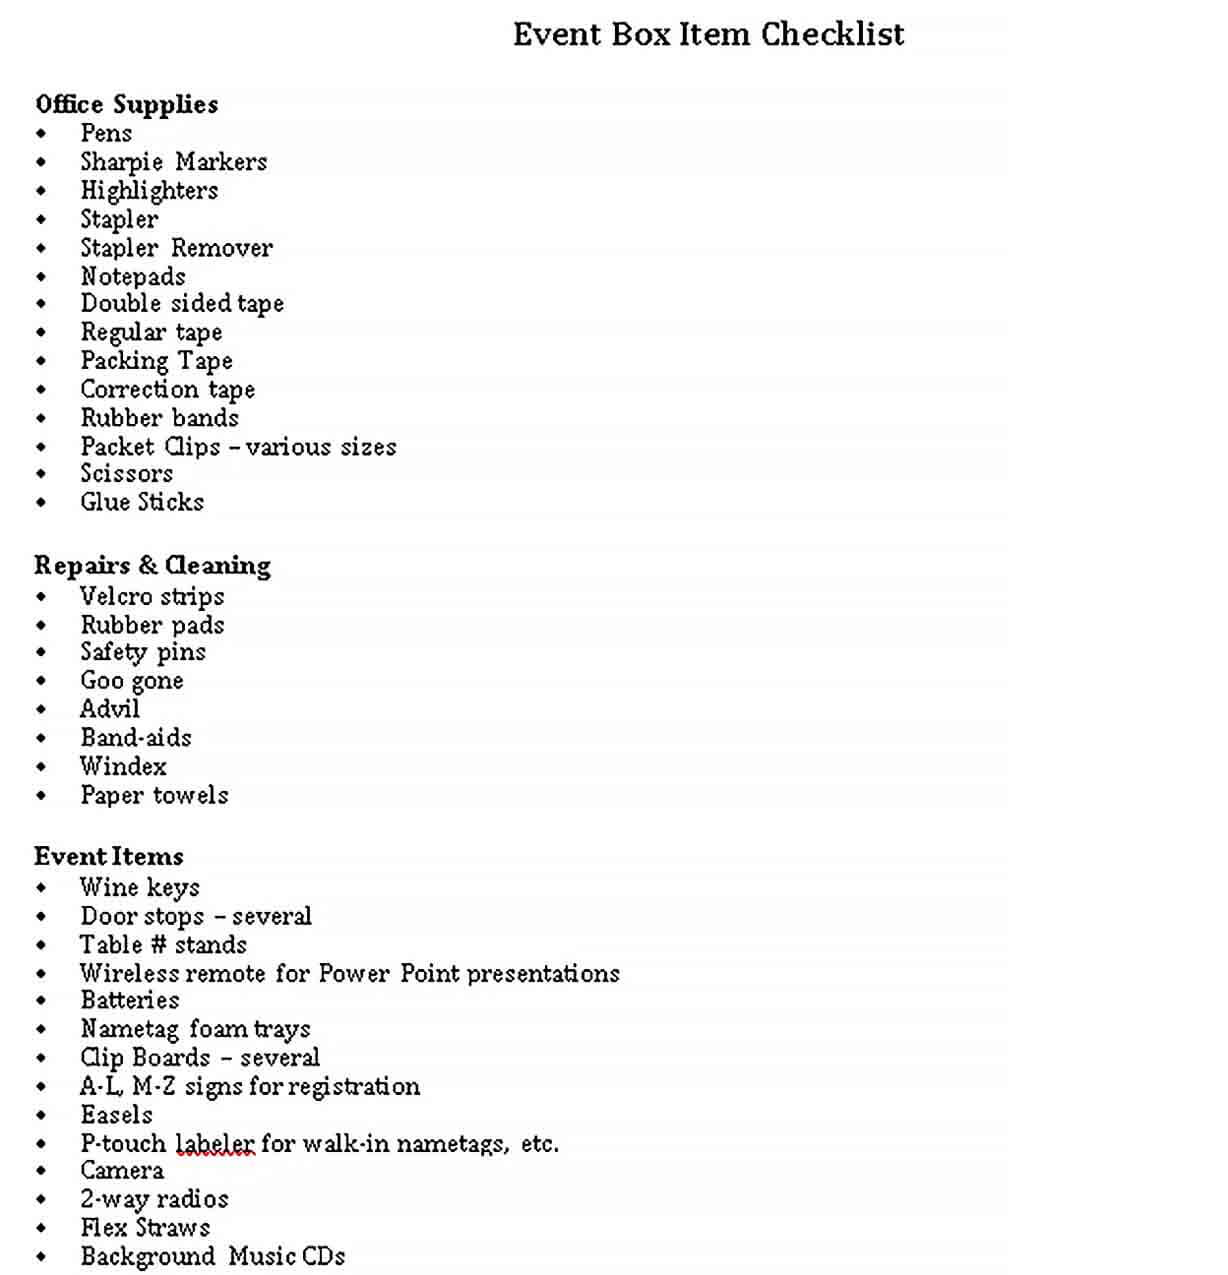 Sample Event Box Items Checklist Template